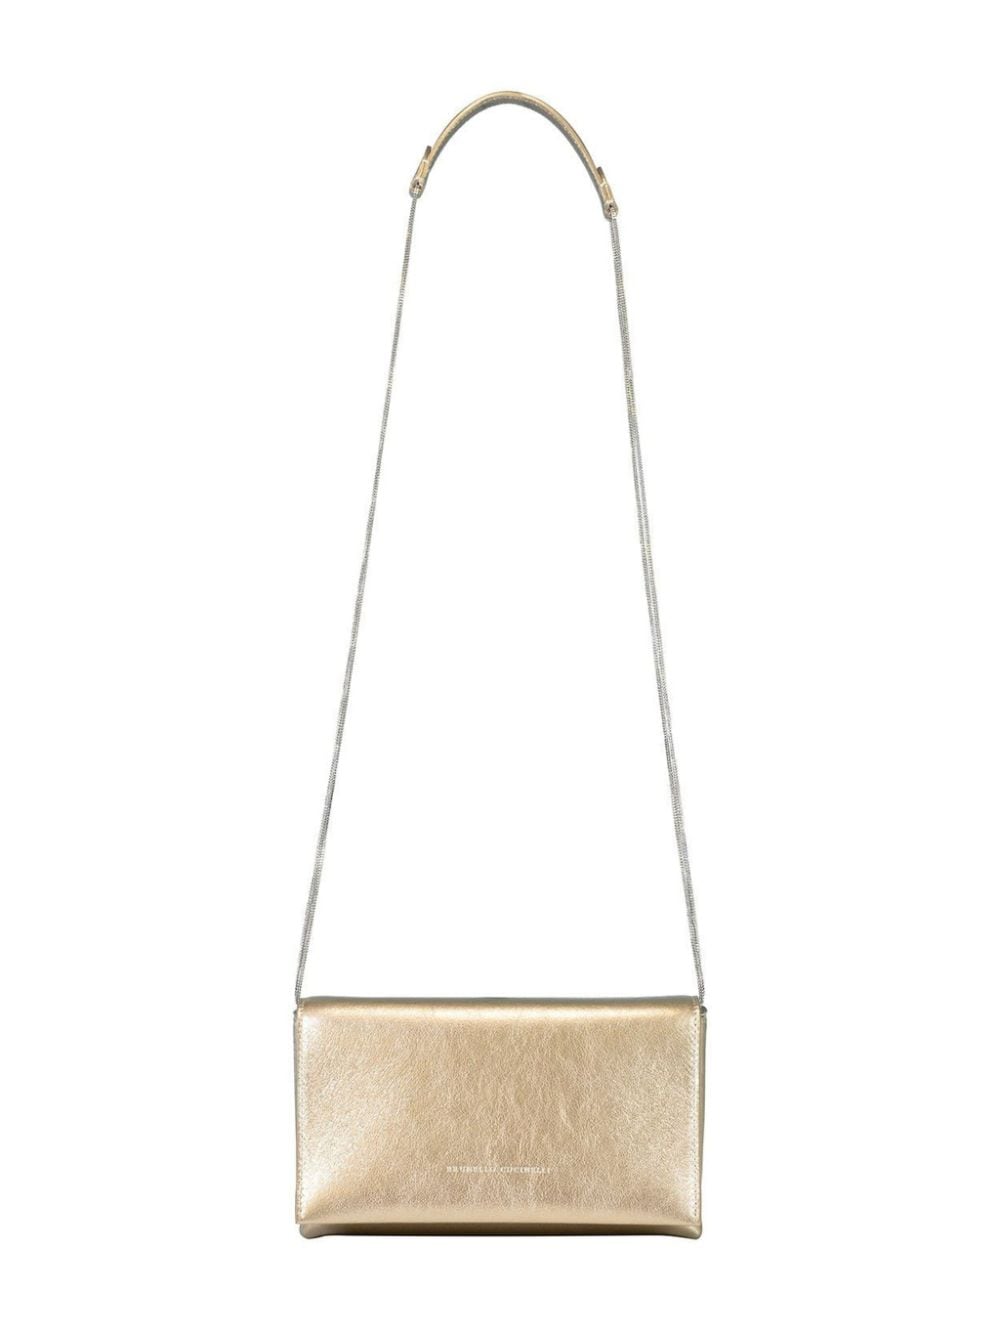 Image 1 of Brunello Cucinelli metallic-leather crossbody bag